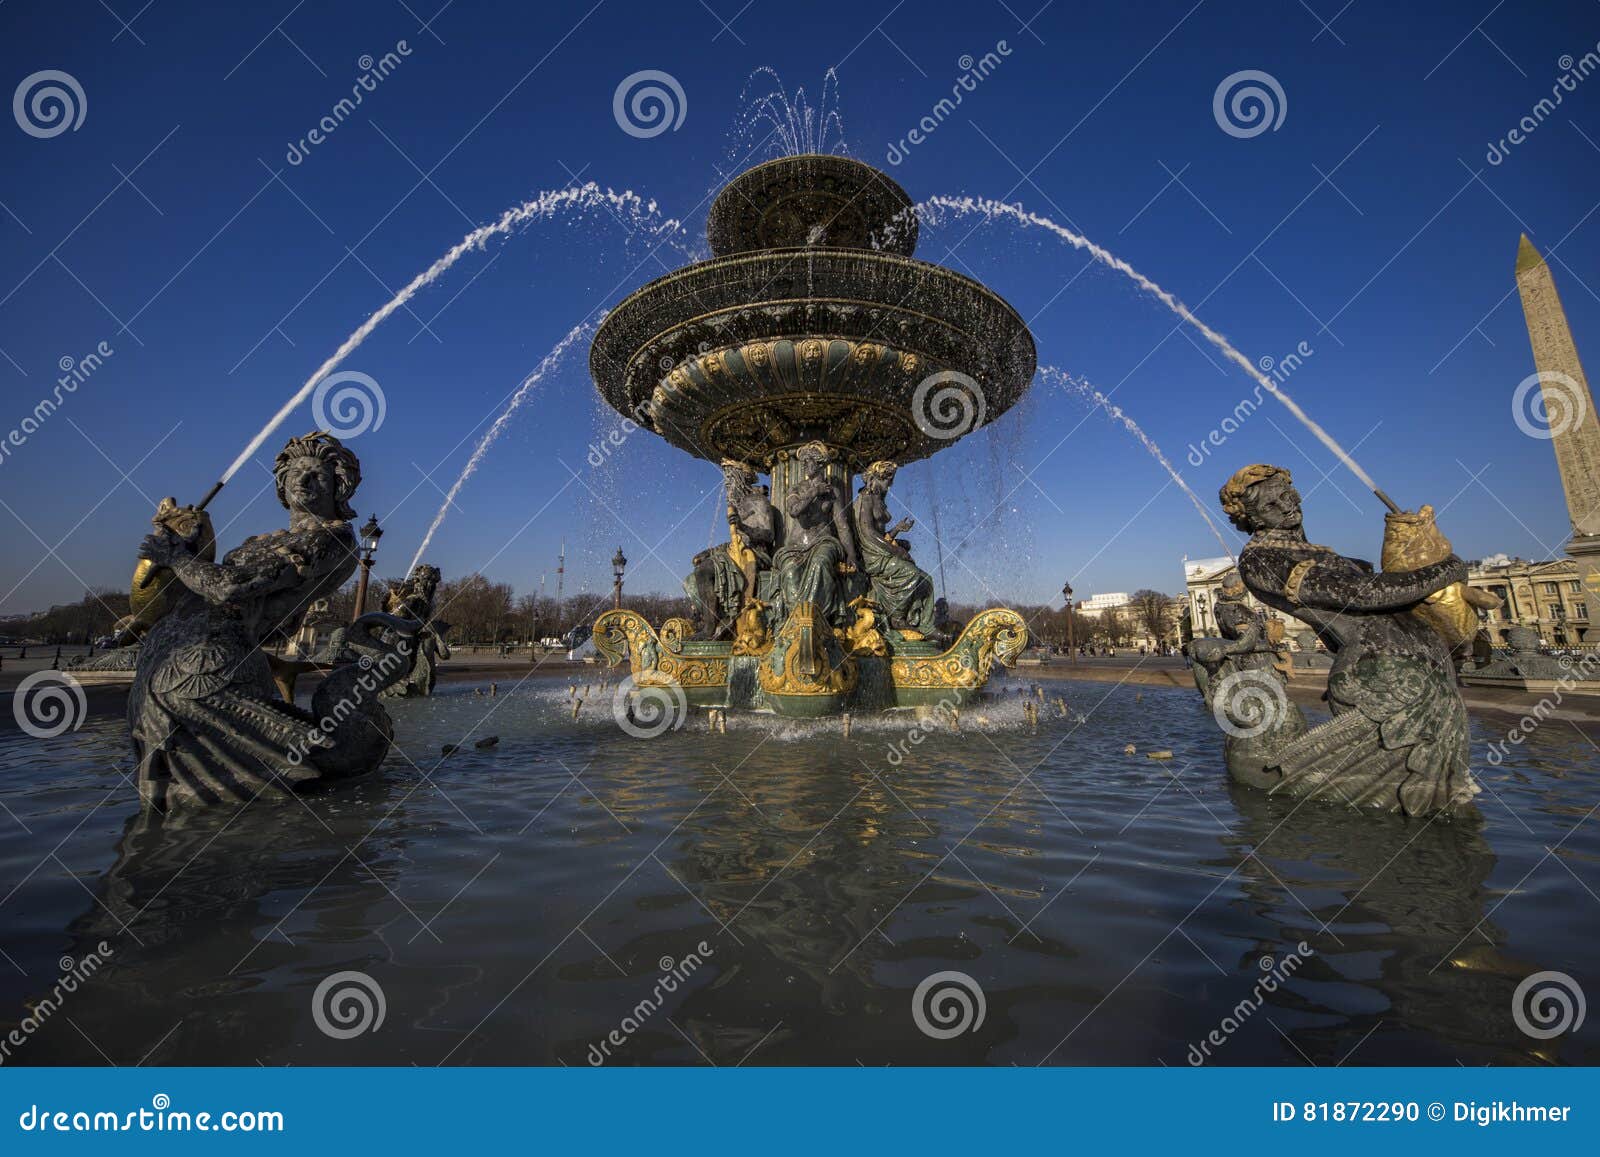 fountain of the seas, paris, france